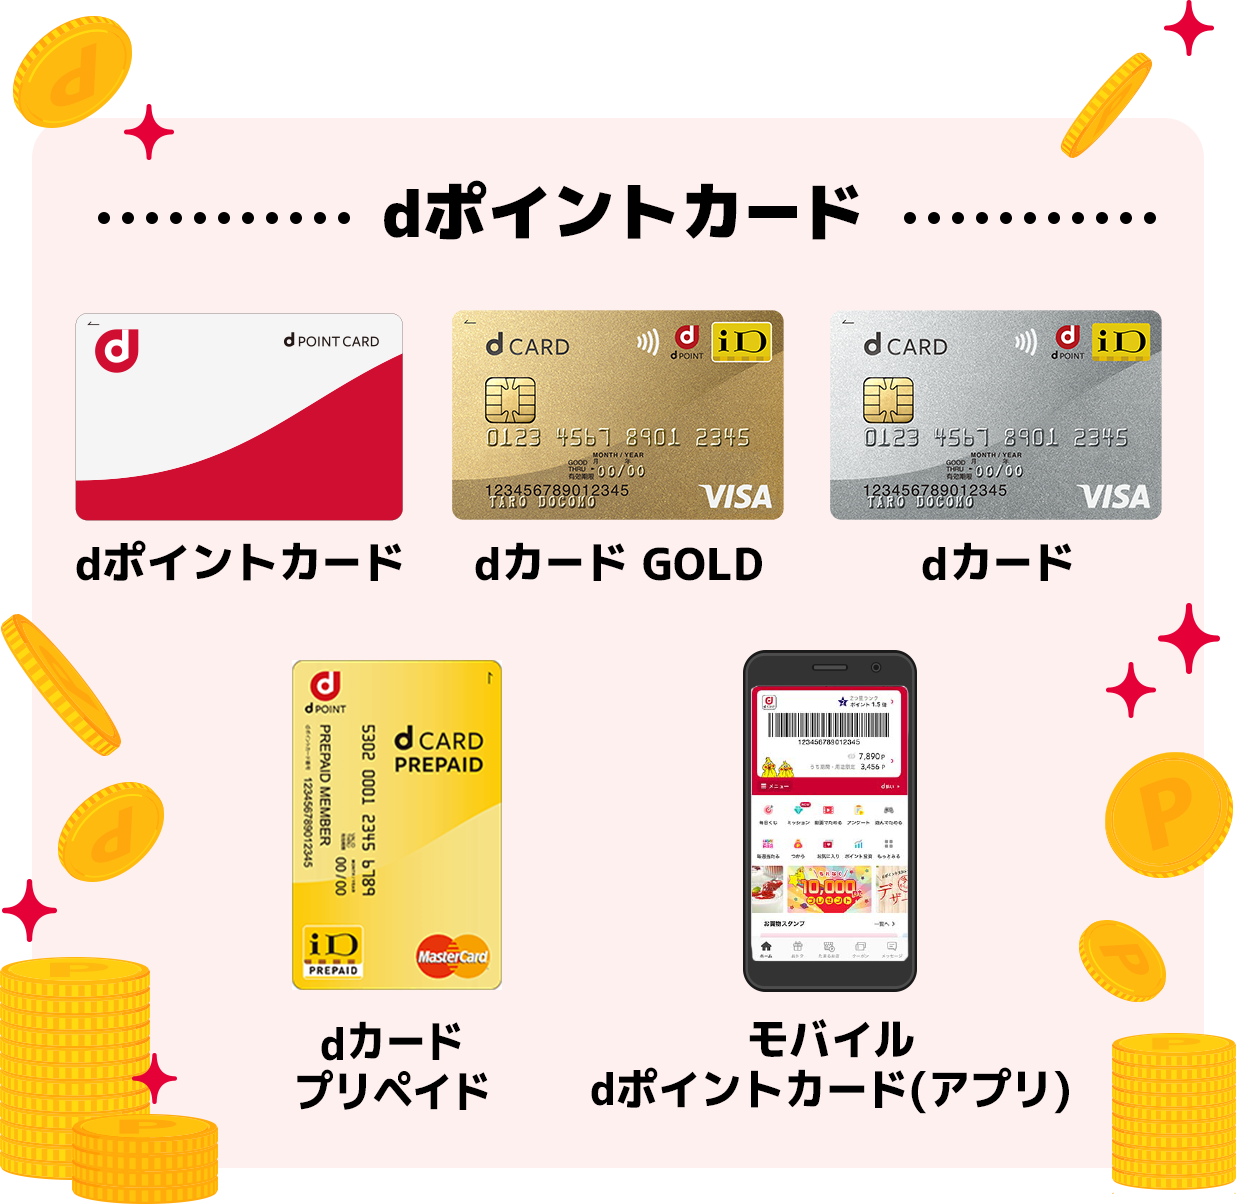 dポイントカード/dカード GOLD/dカード/dカード プリペイド/モバイルdポイントカード（アプリ）